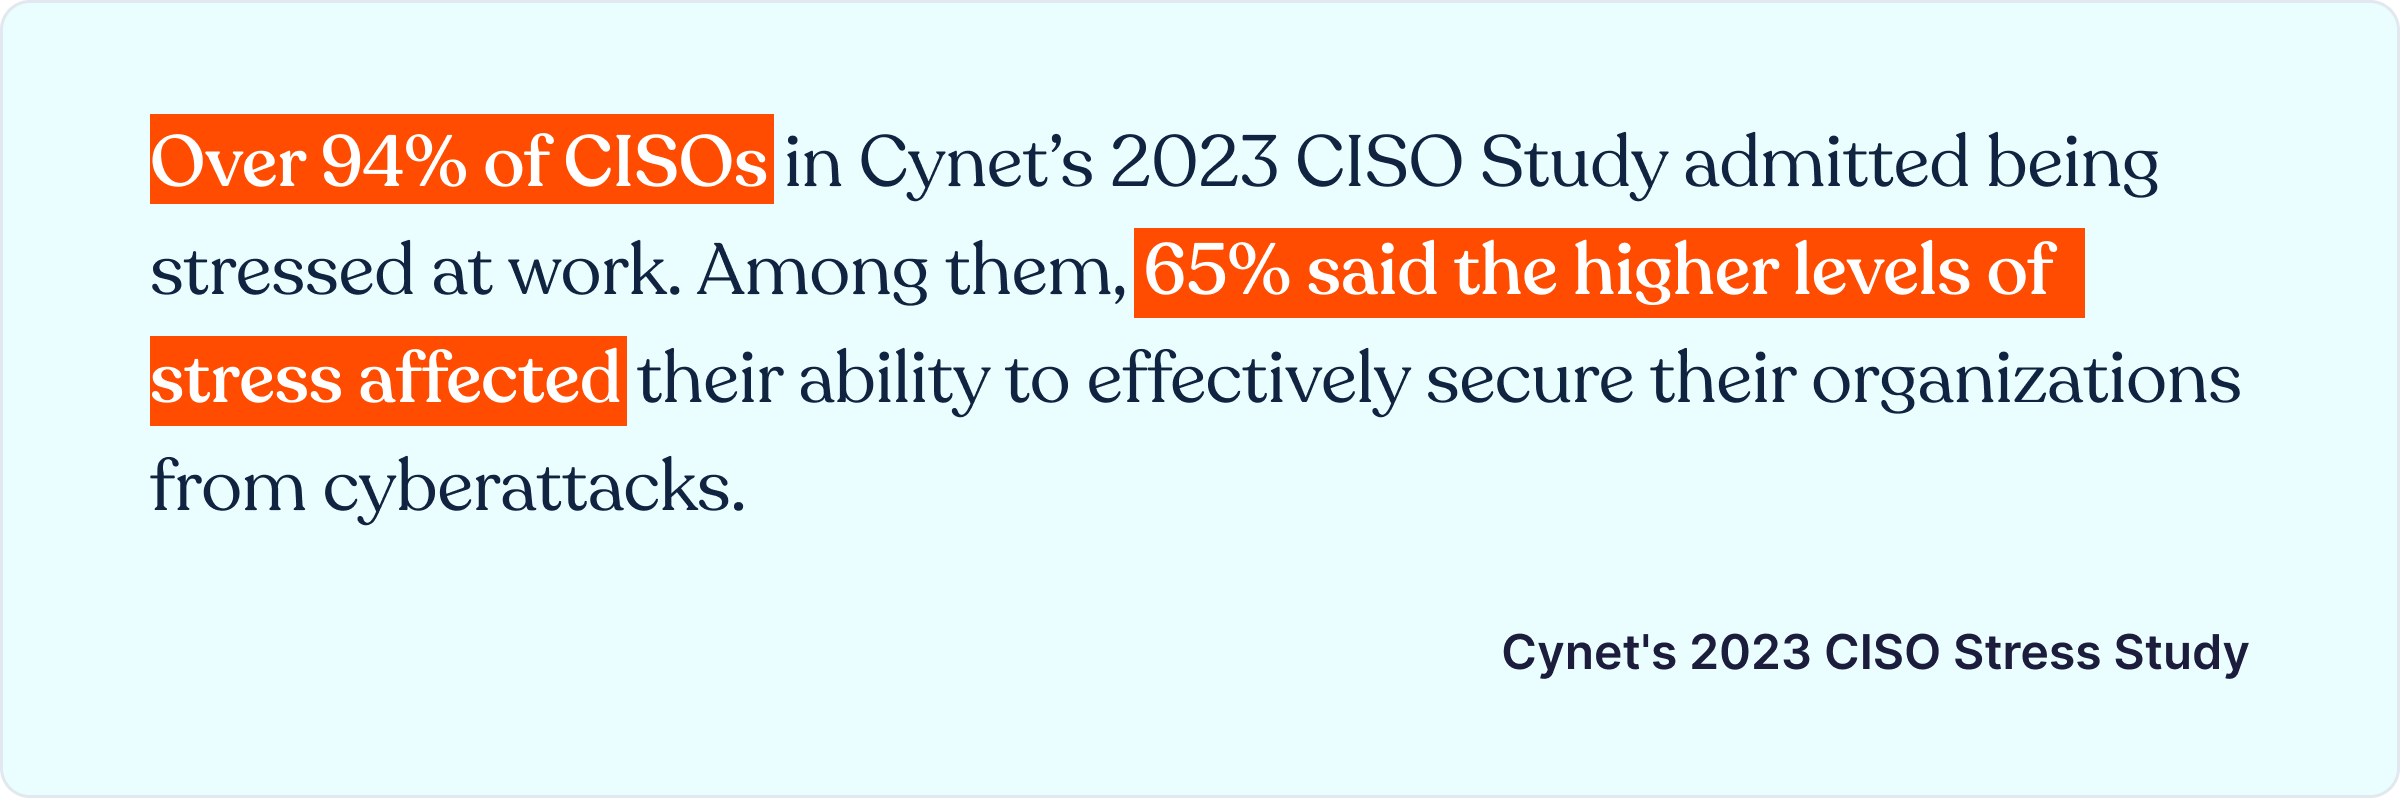 Cynet's 2023 CISO Stress Study